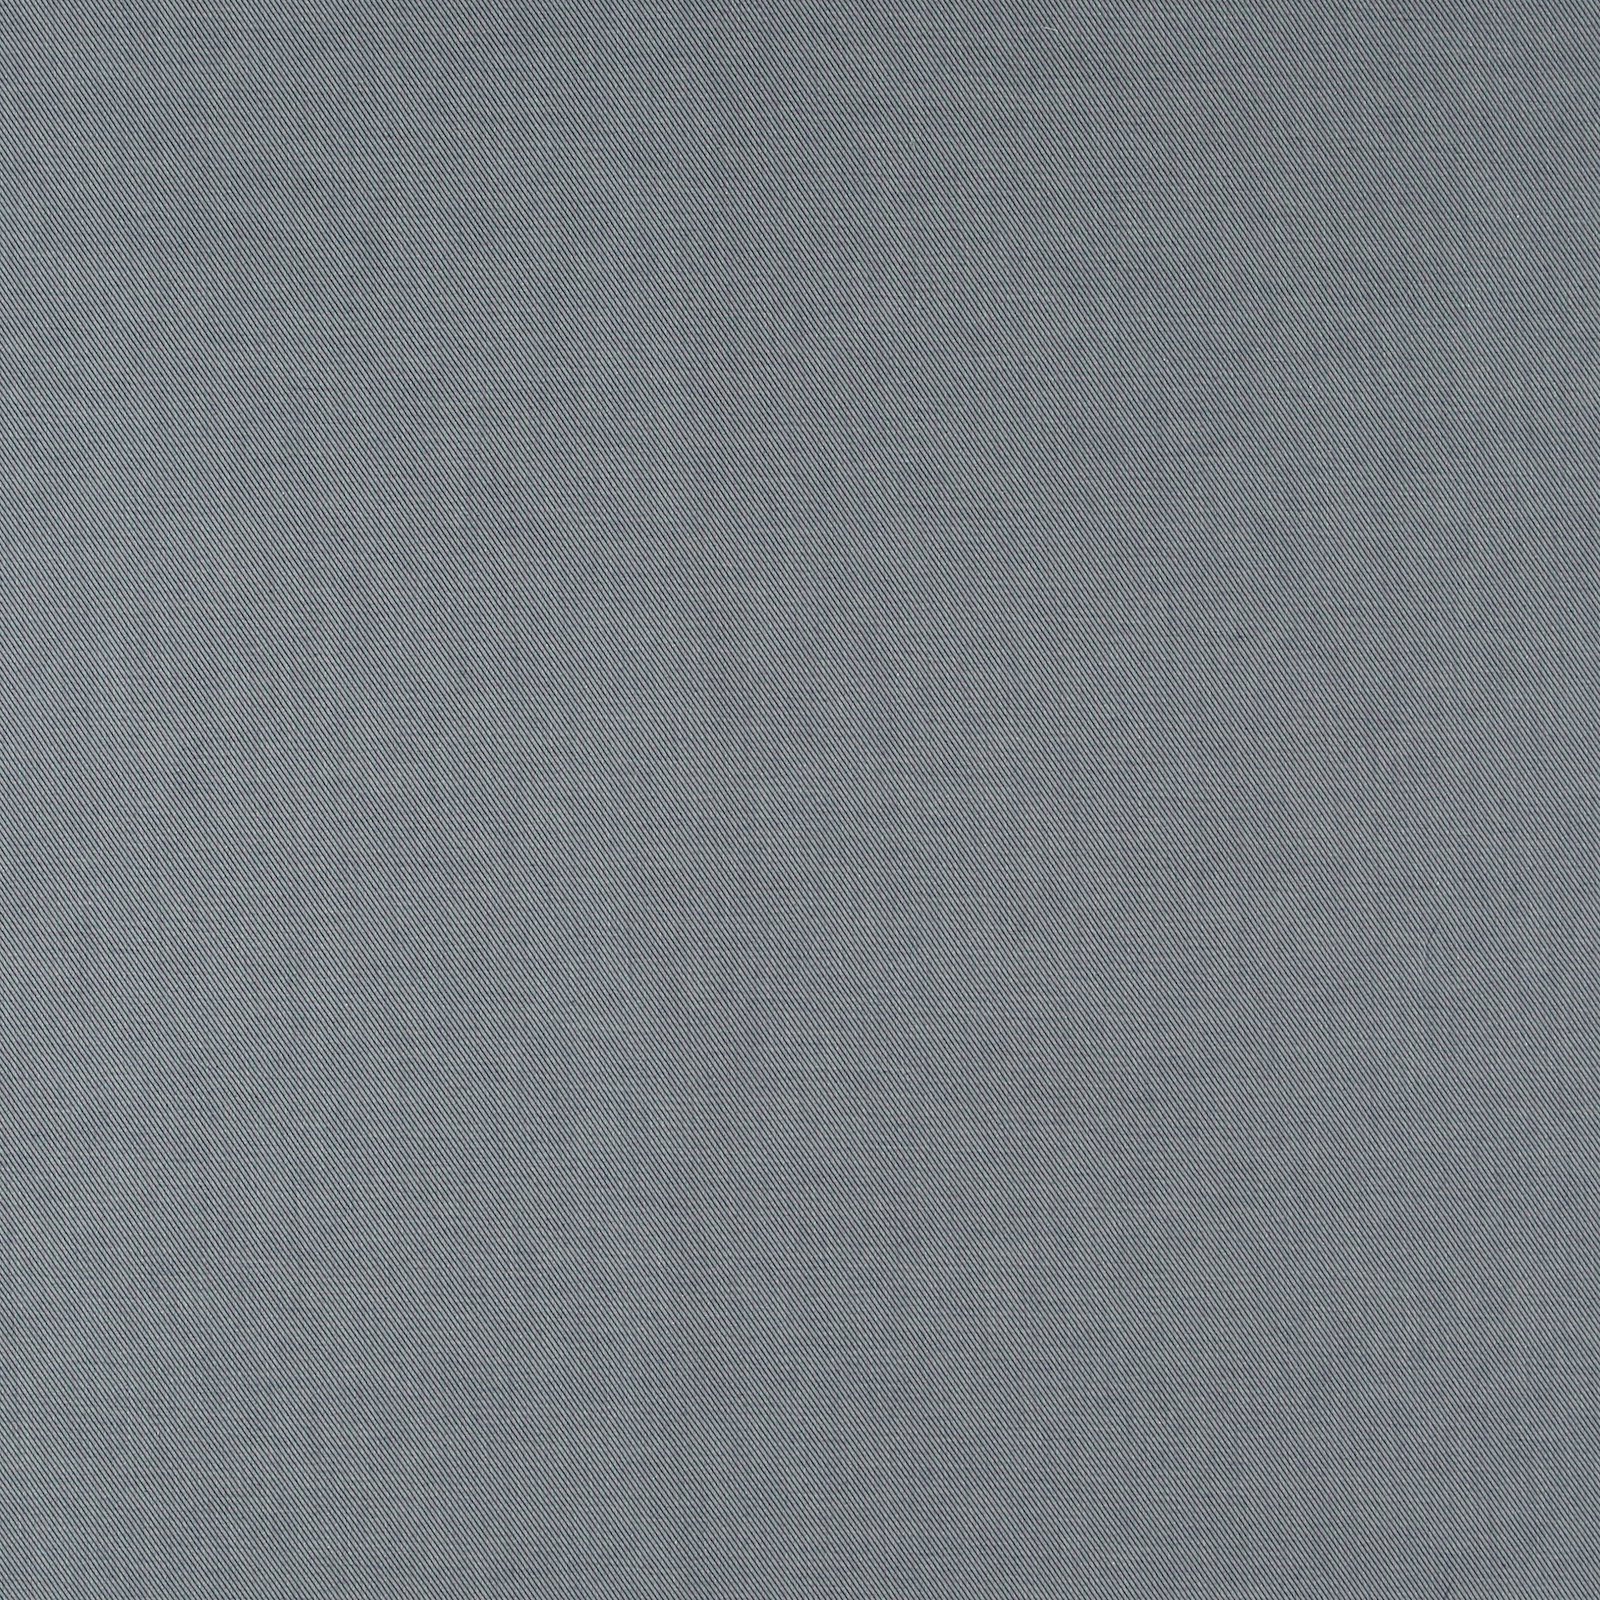 Woven cotton dusty blue/white YD stripe 501860_pack_sp